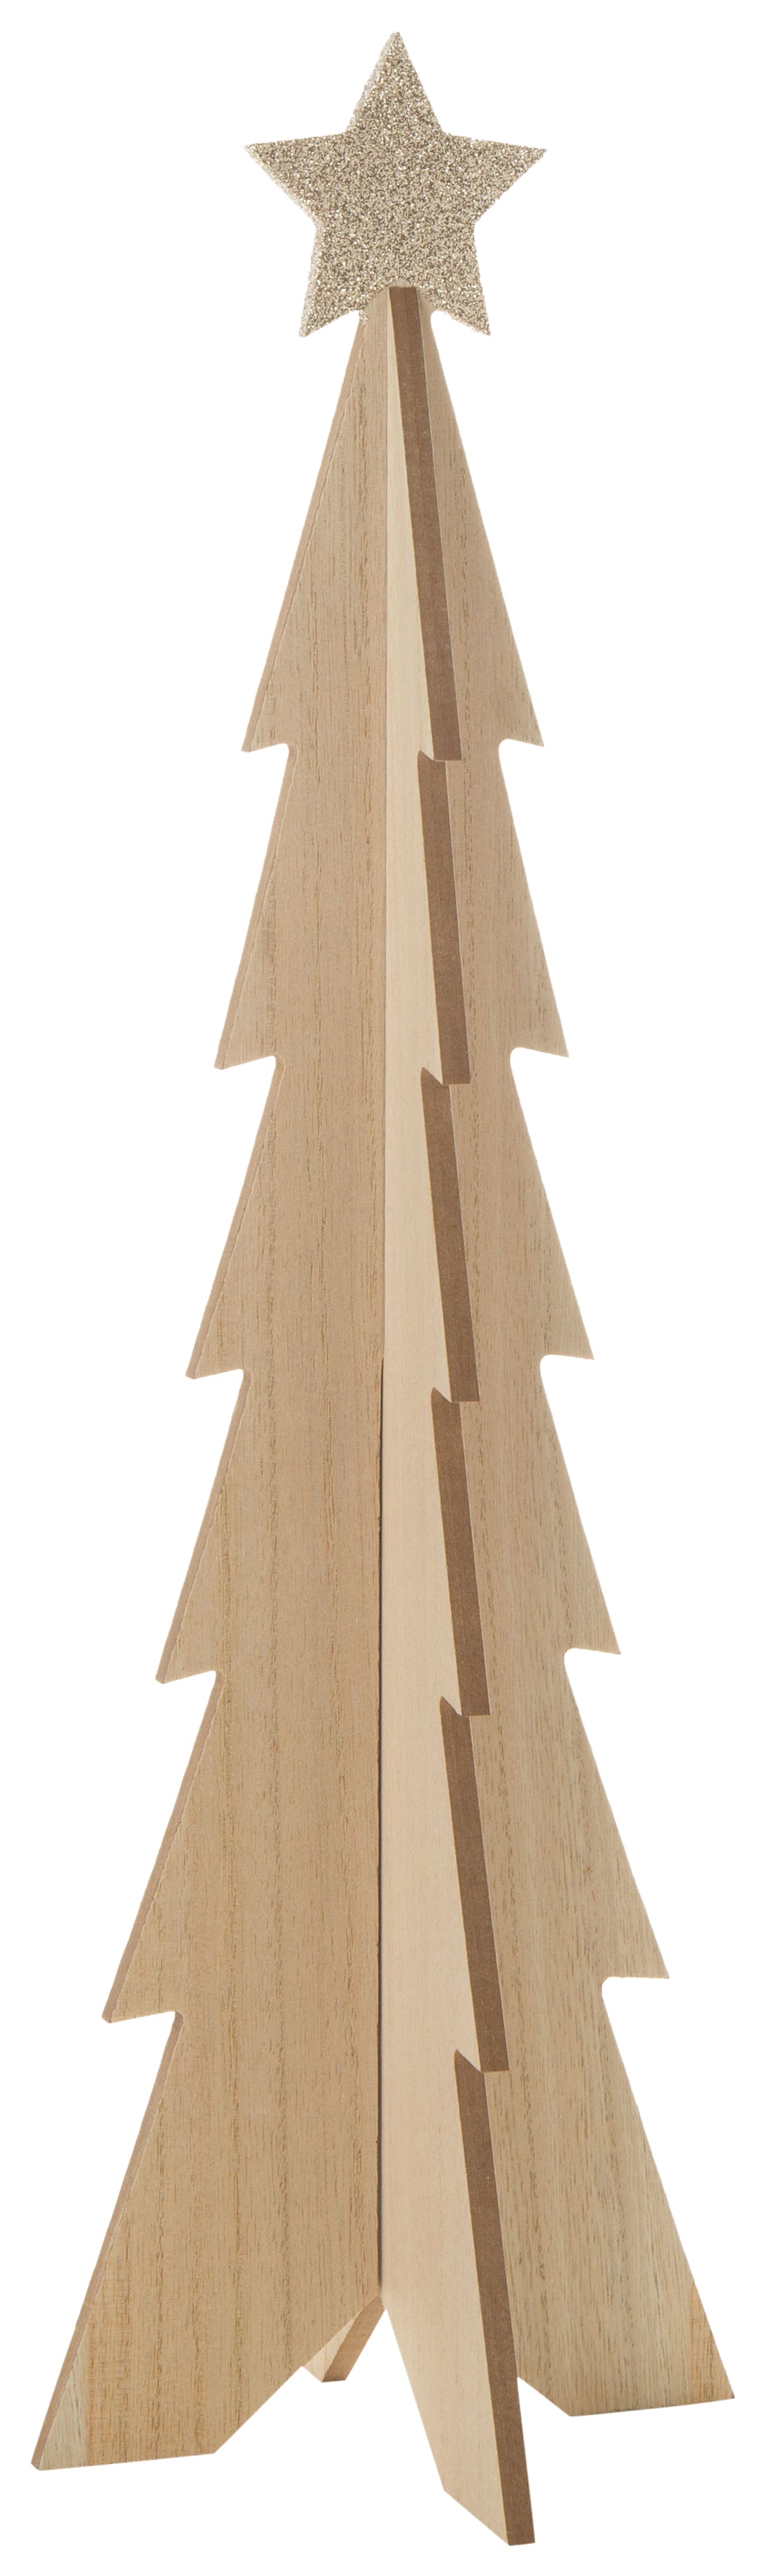 3D Wooden Tabletop Tree